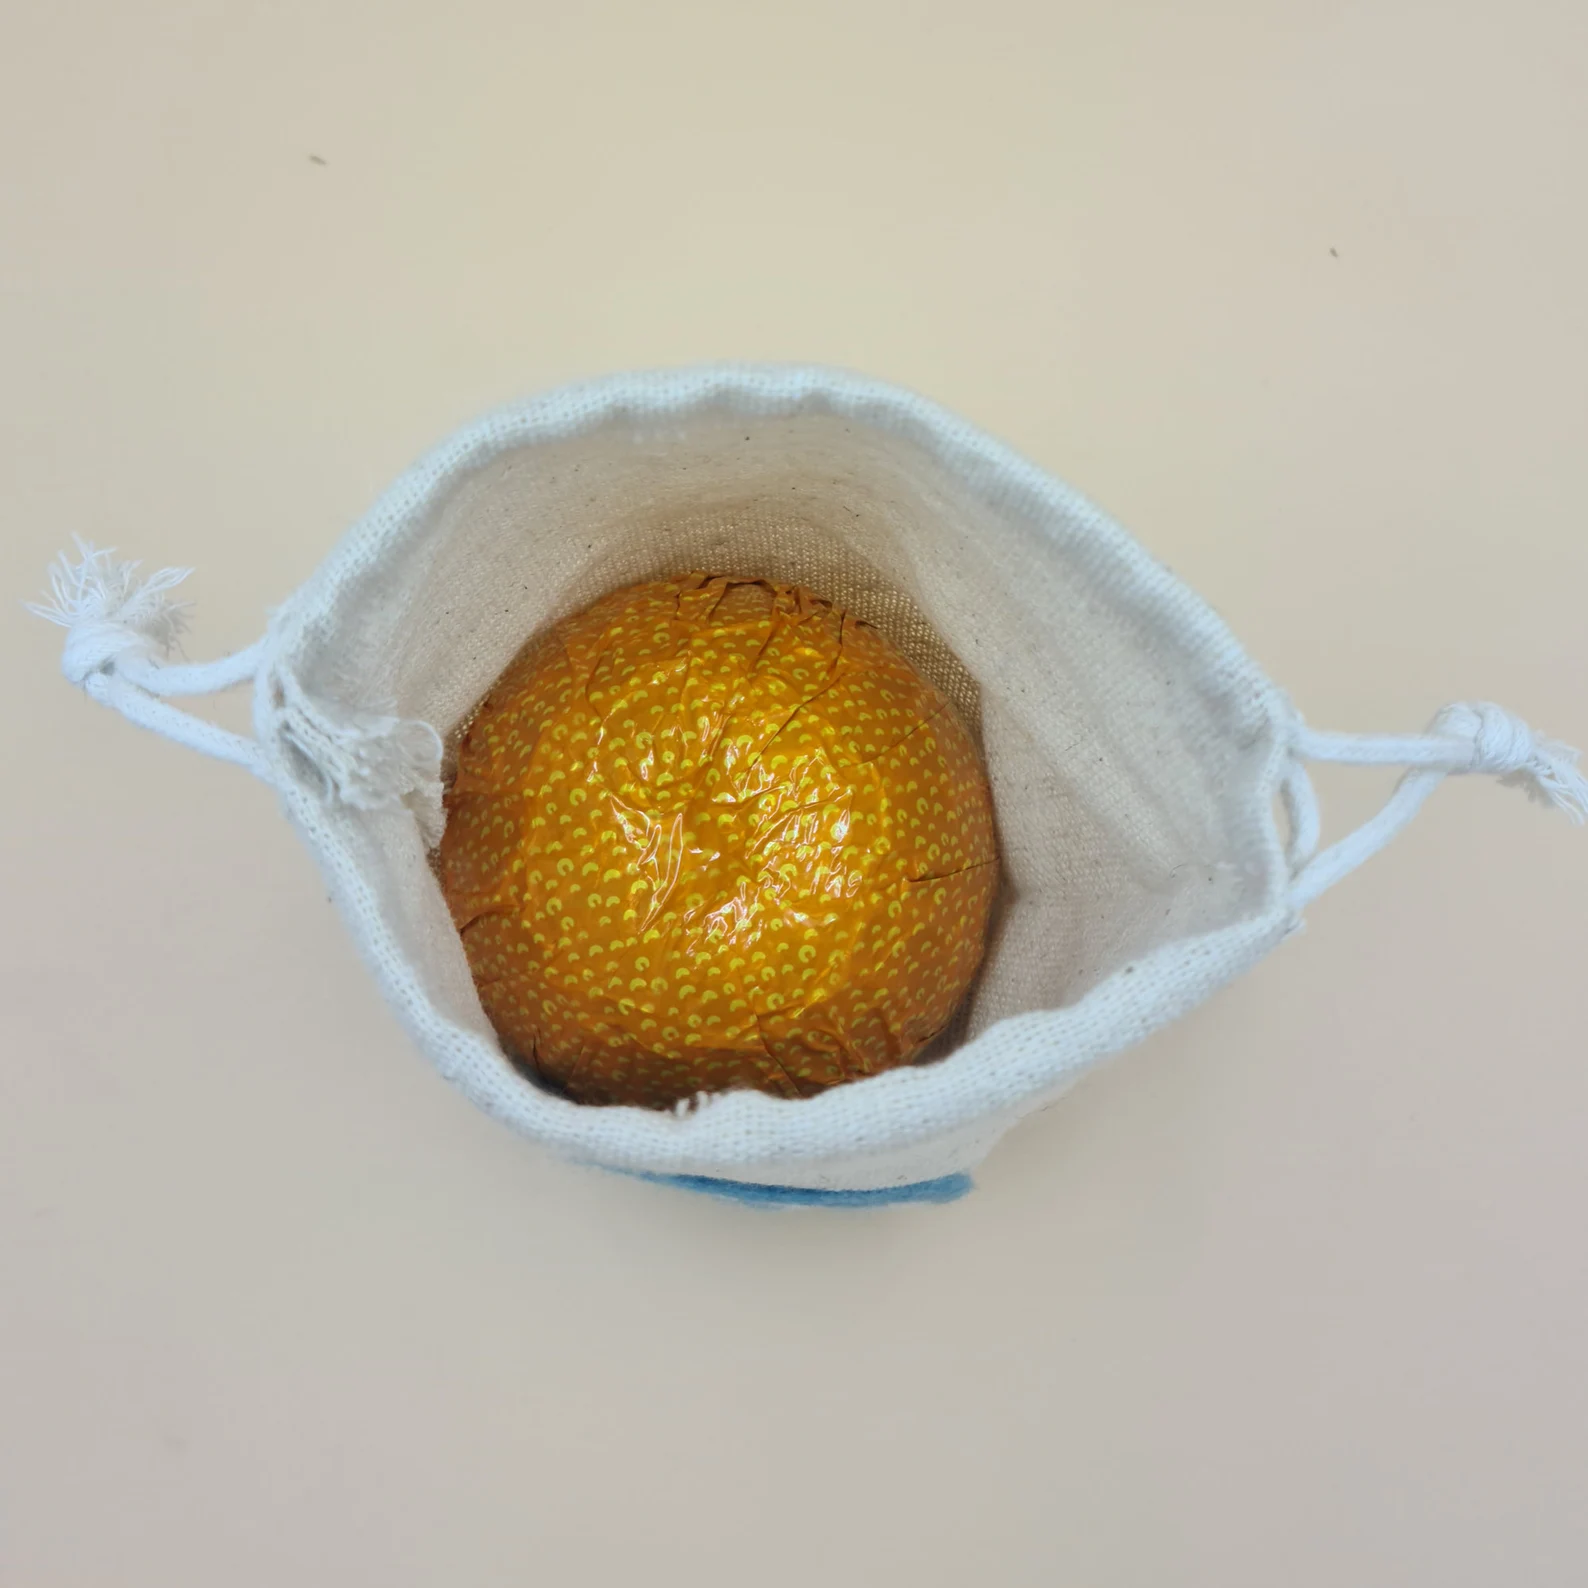 Internal view of cotton drawstring bag including chocolate orange